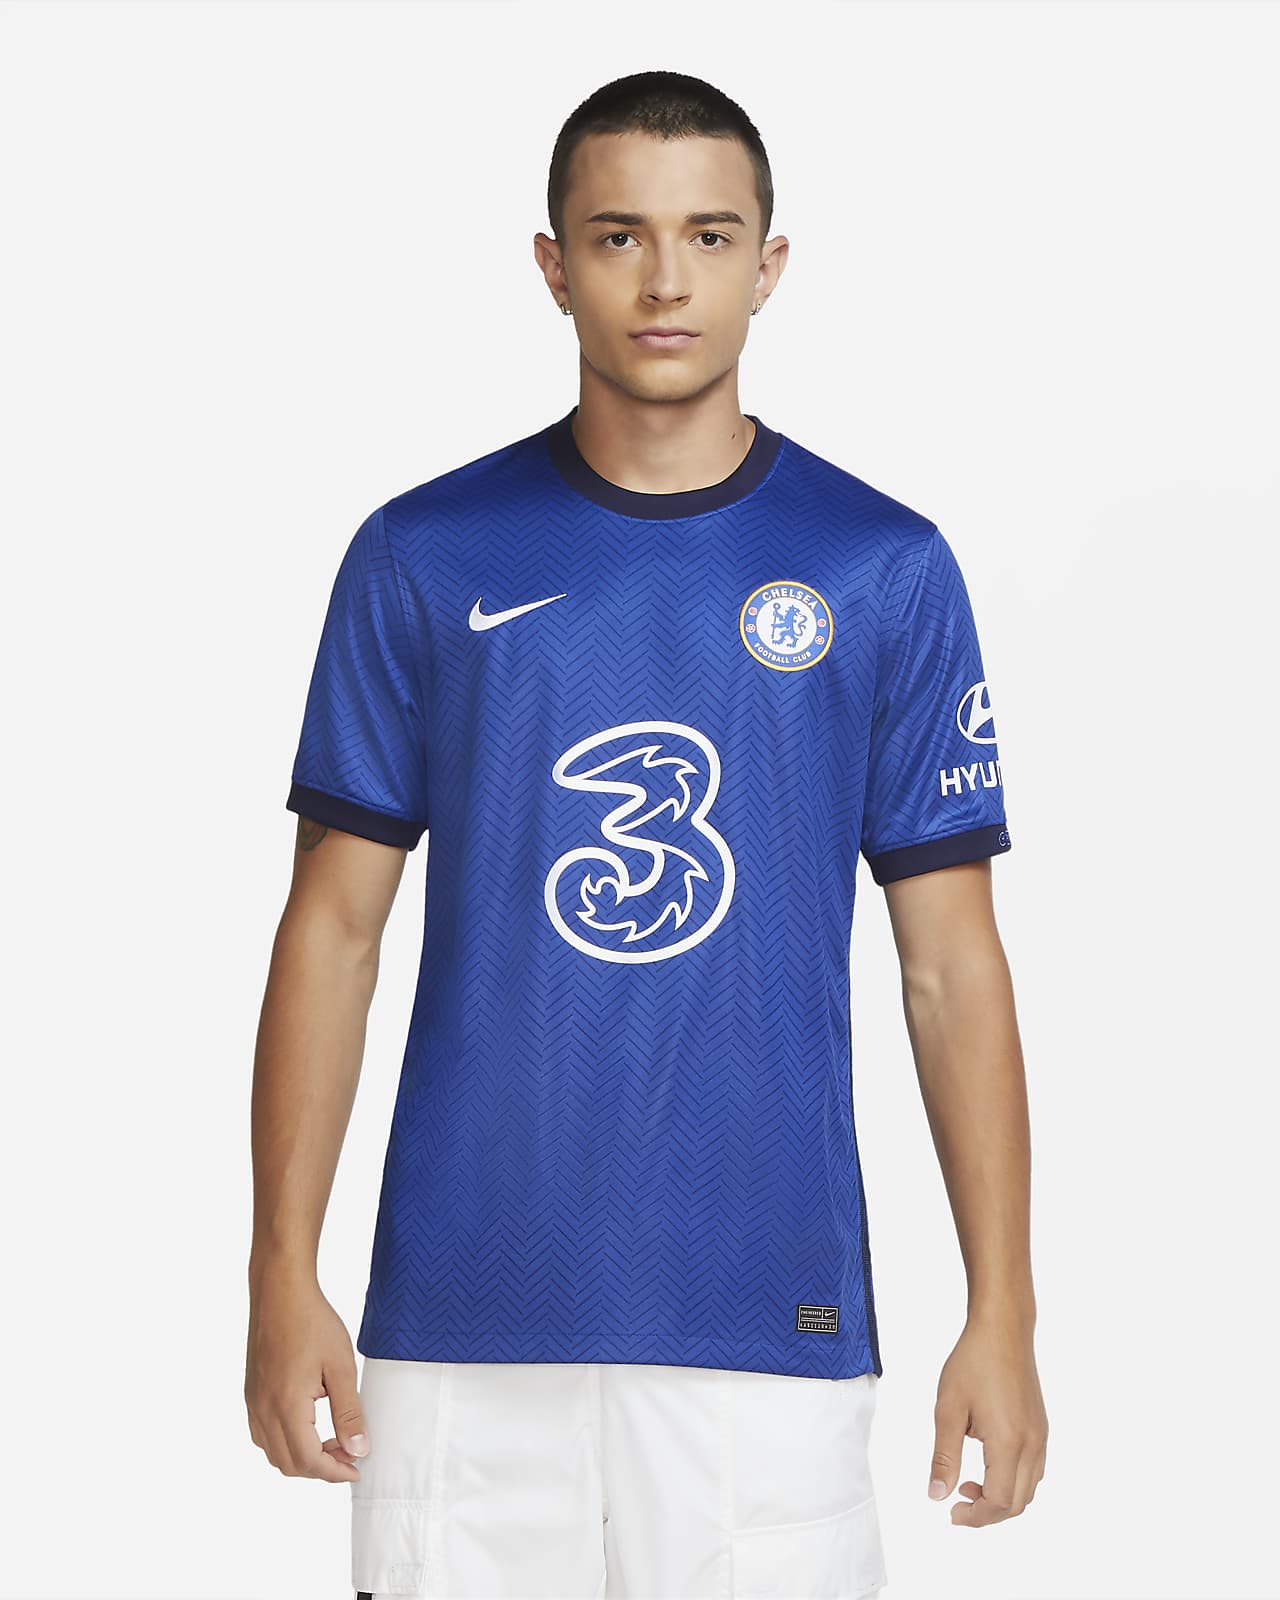 Camiseta de fútbol de local para hombre Stadium del Chelsea FC 2020/21. Nike.com